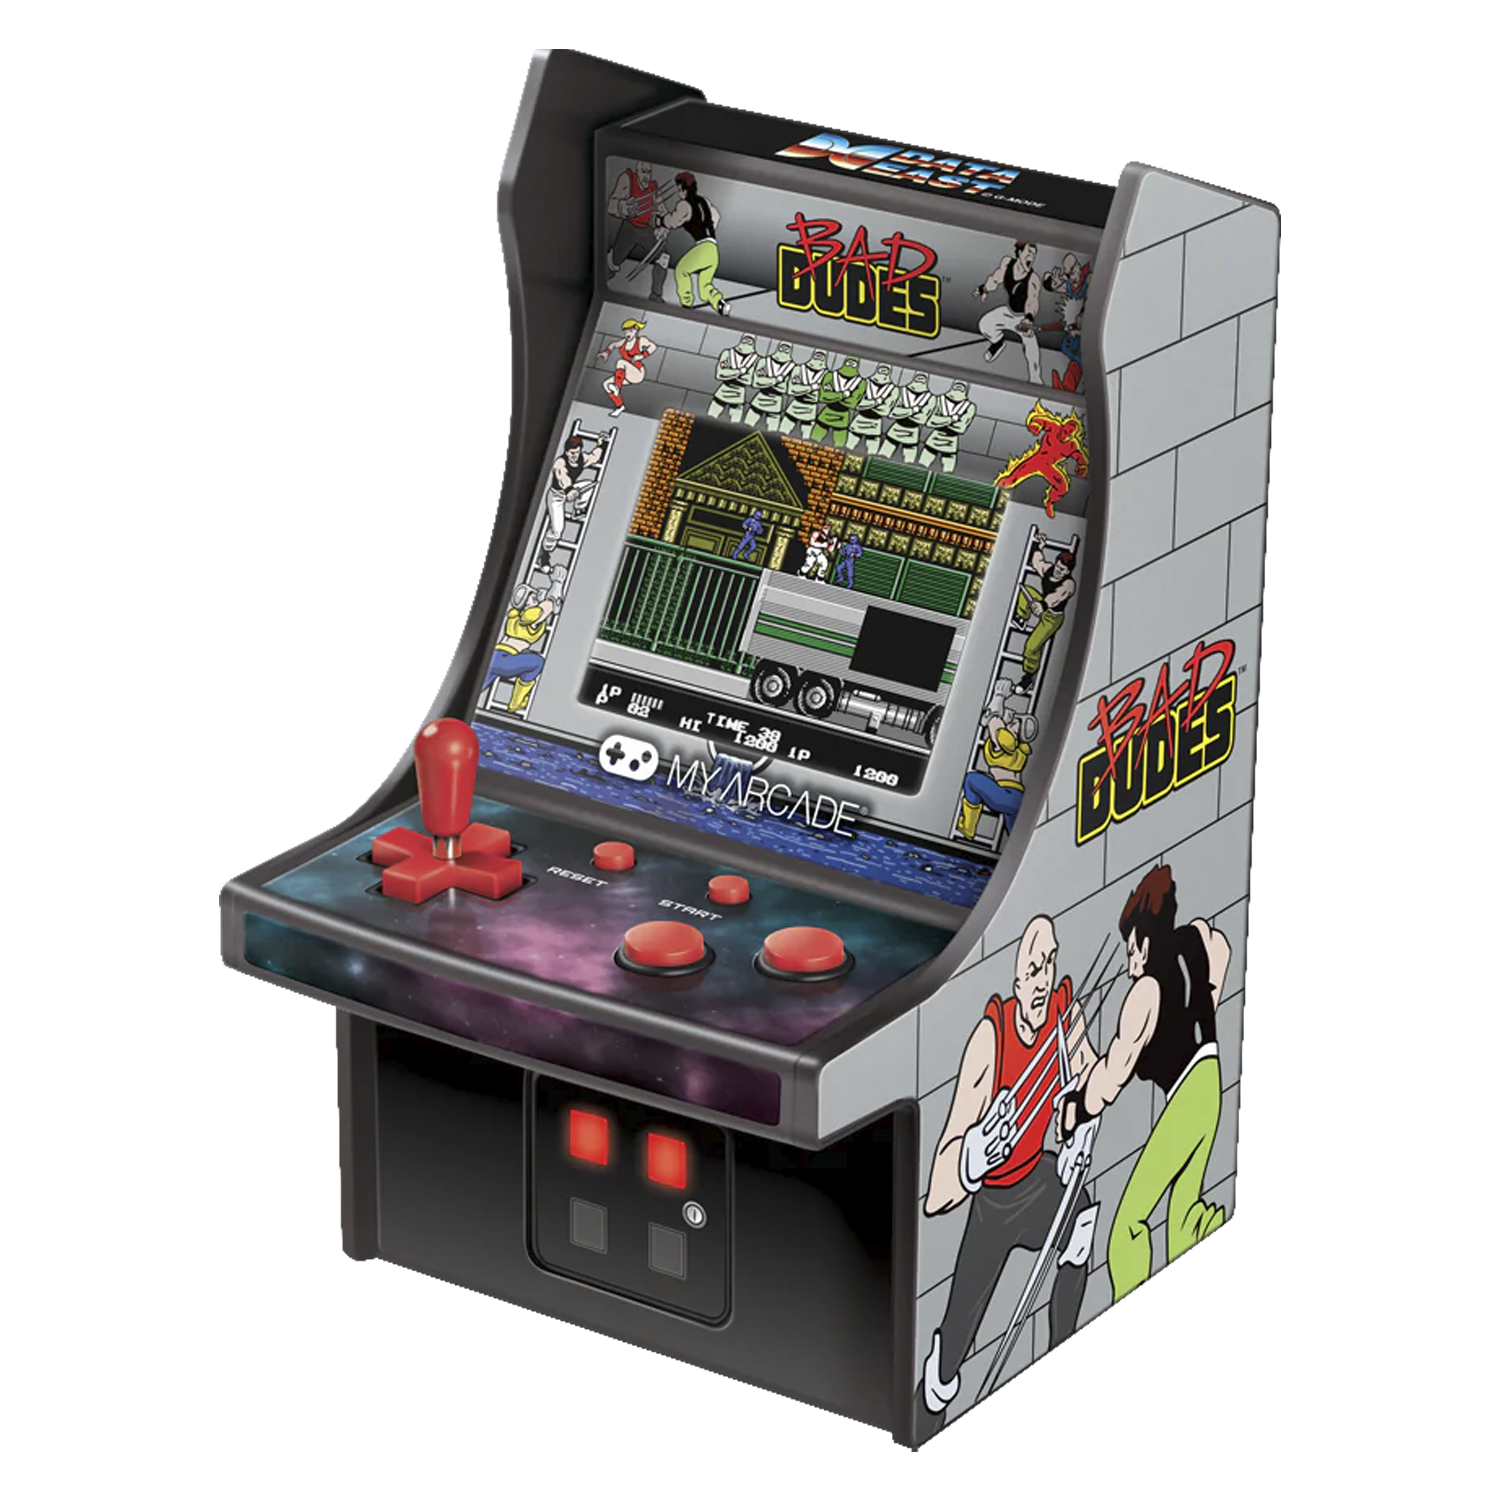 Console My Arcade Bad Dudes Micro Player - DGUNL-3214